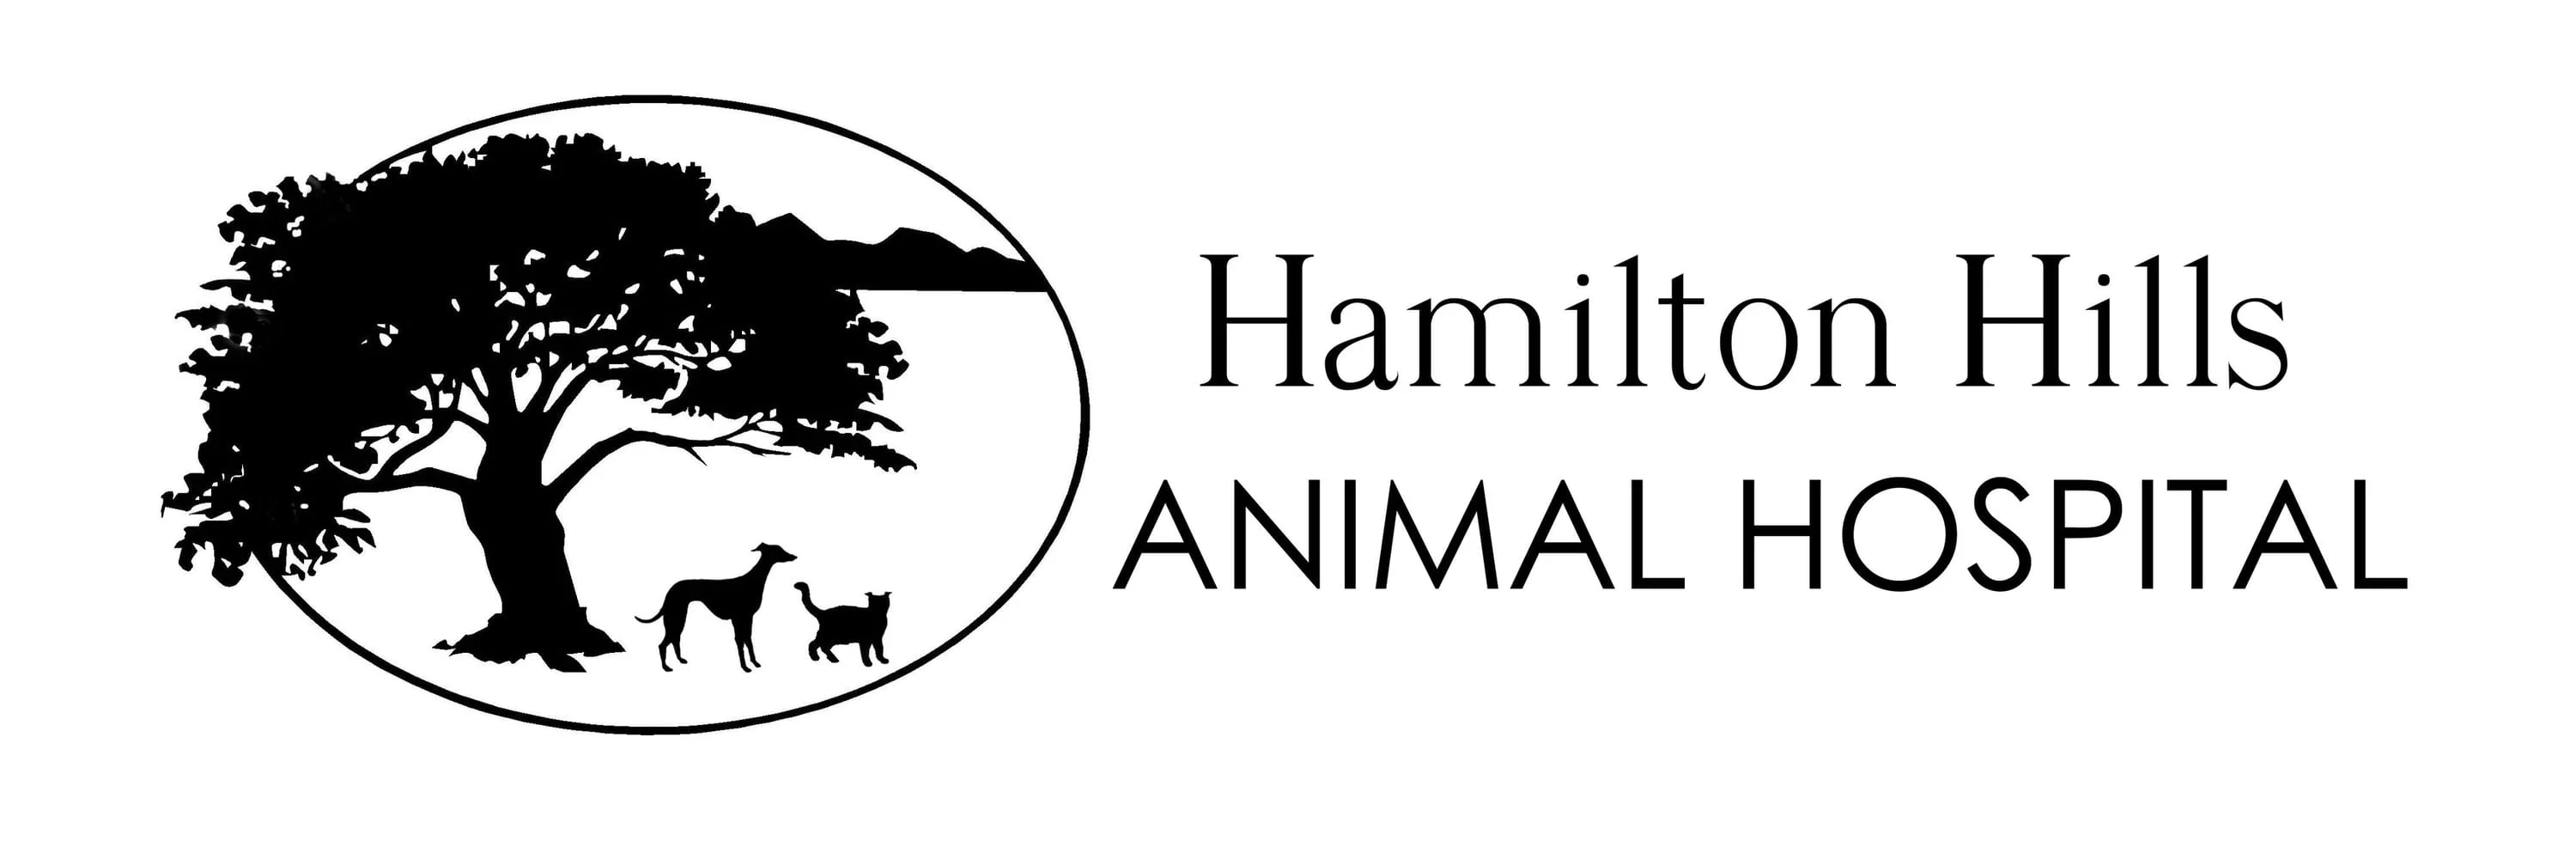 Hamilton Hills Animal Hospital